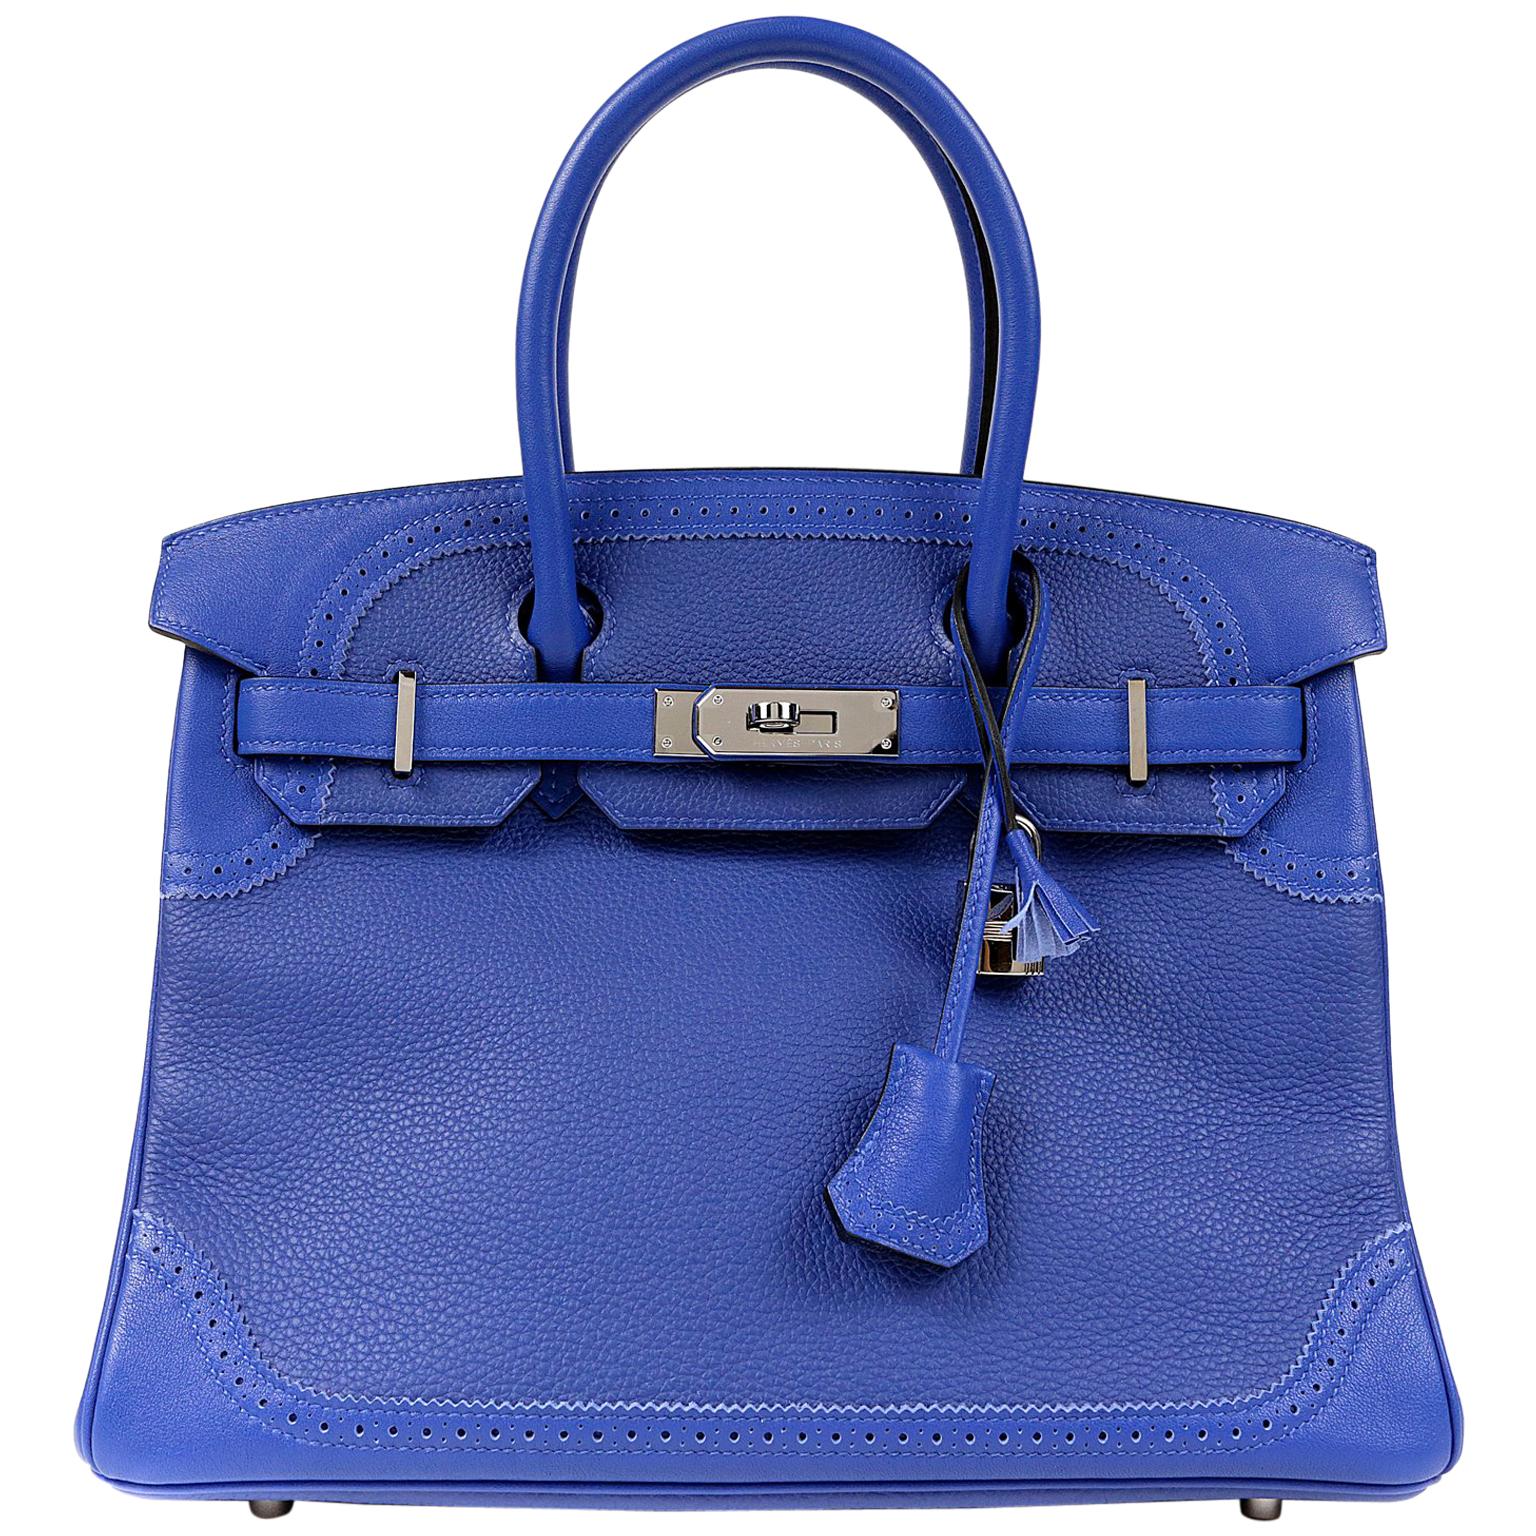 Hermès Blue Electrique Togo 30 cm Ghillies Birkin Bag